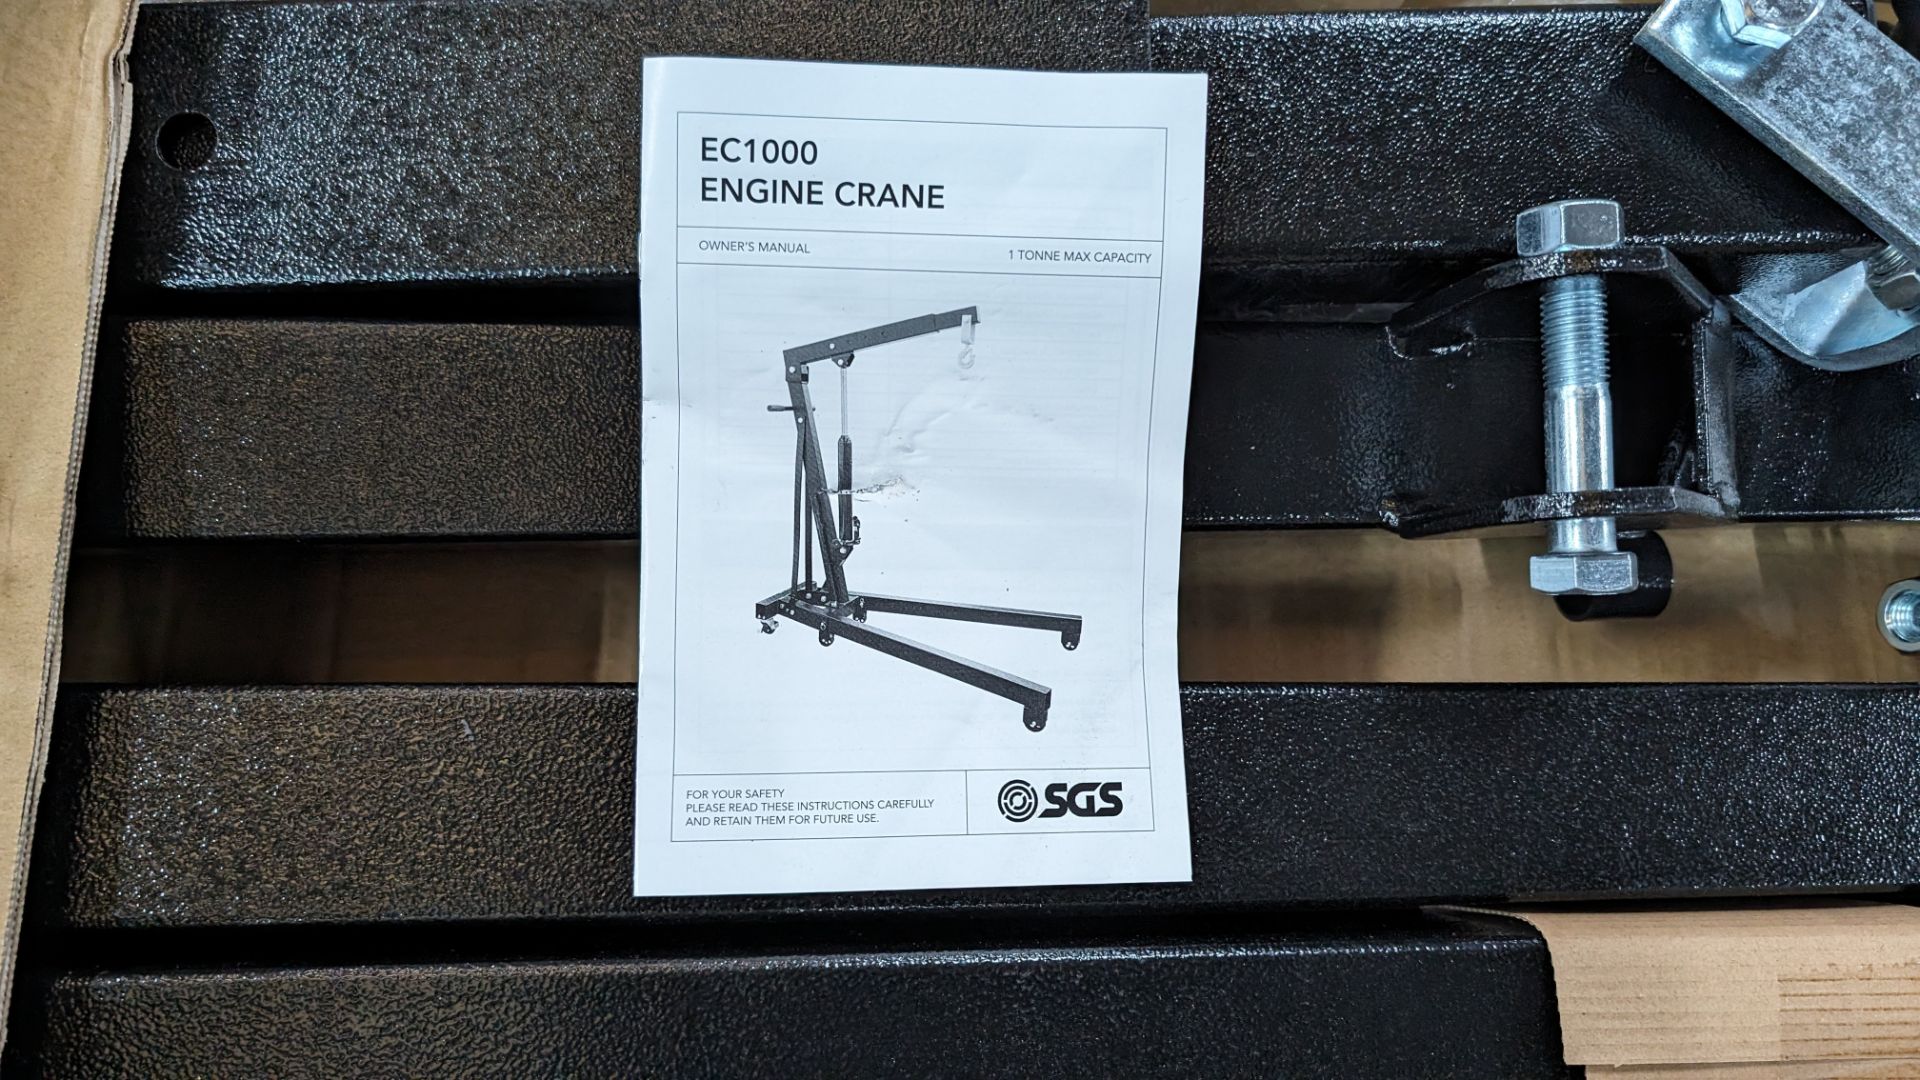 SGS model EC1000 engine crane - appears new/unused - Image 4 of 8